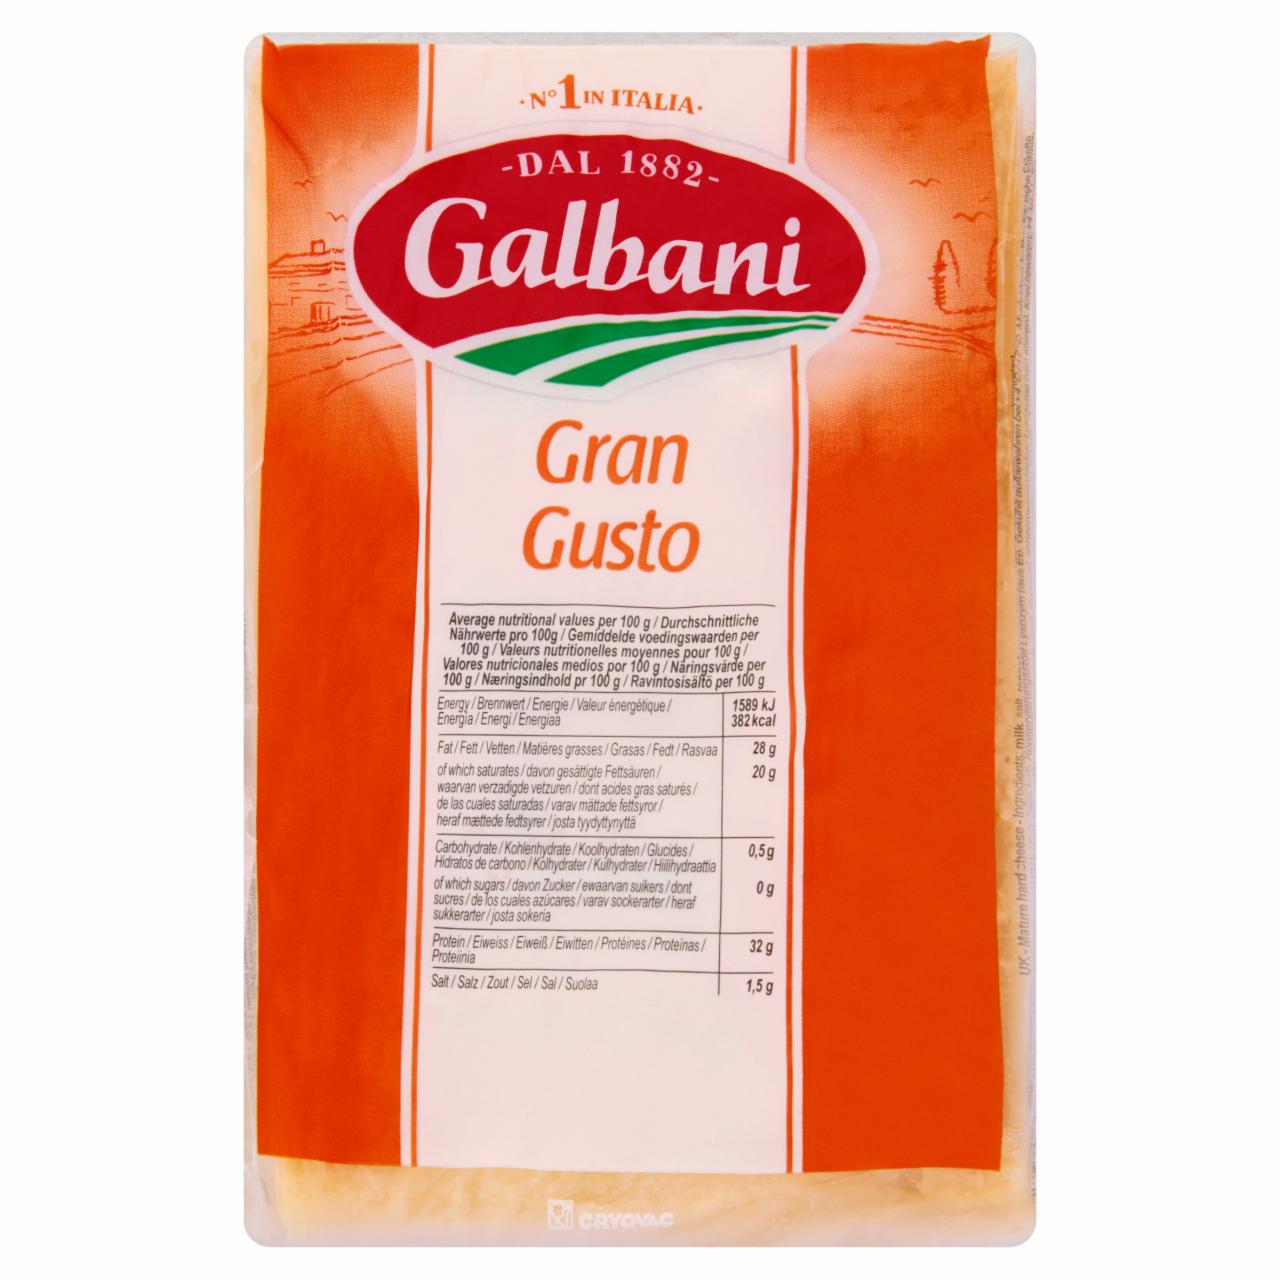 Képek - Galbani Gran Gusto félzsíros kemény sajt